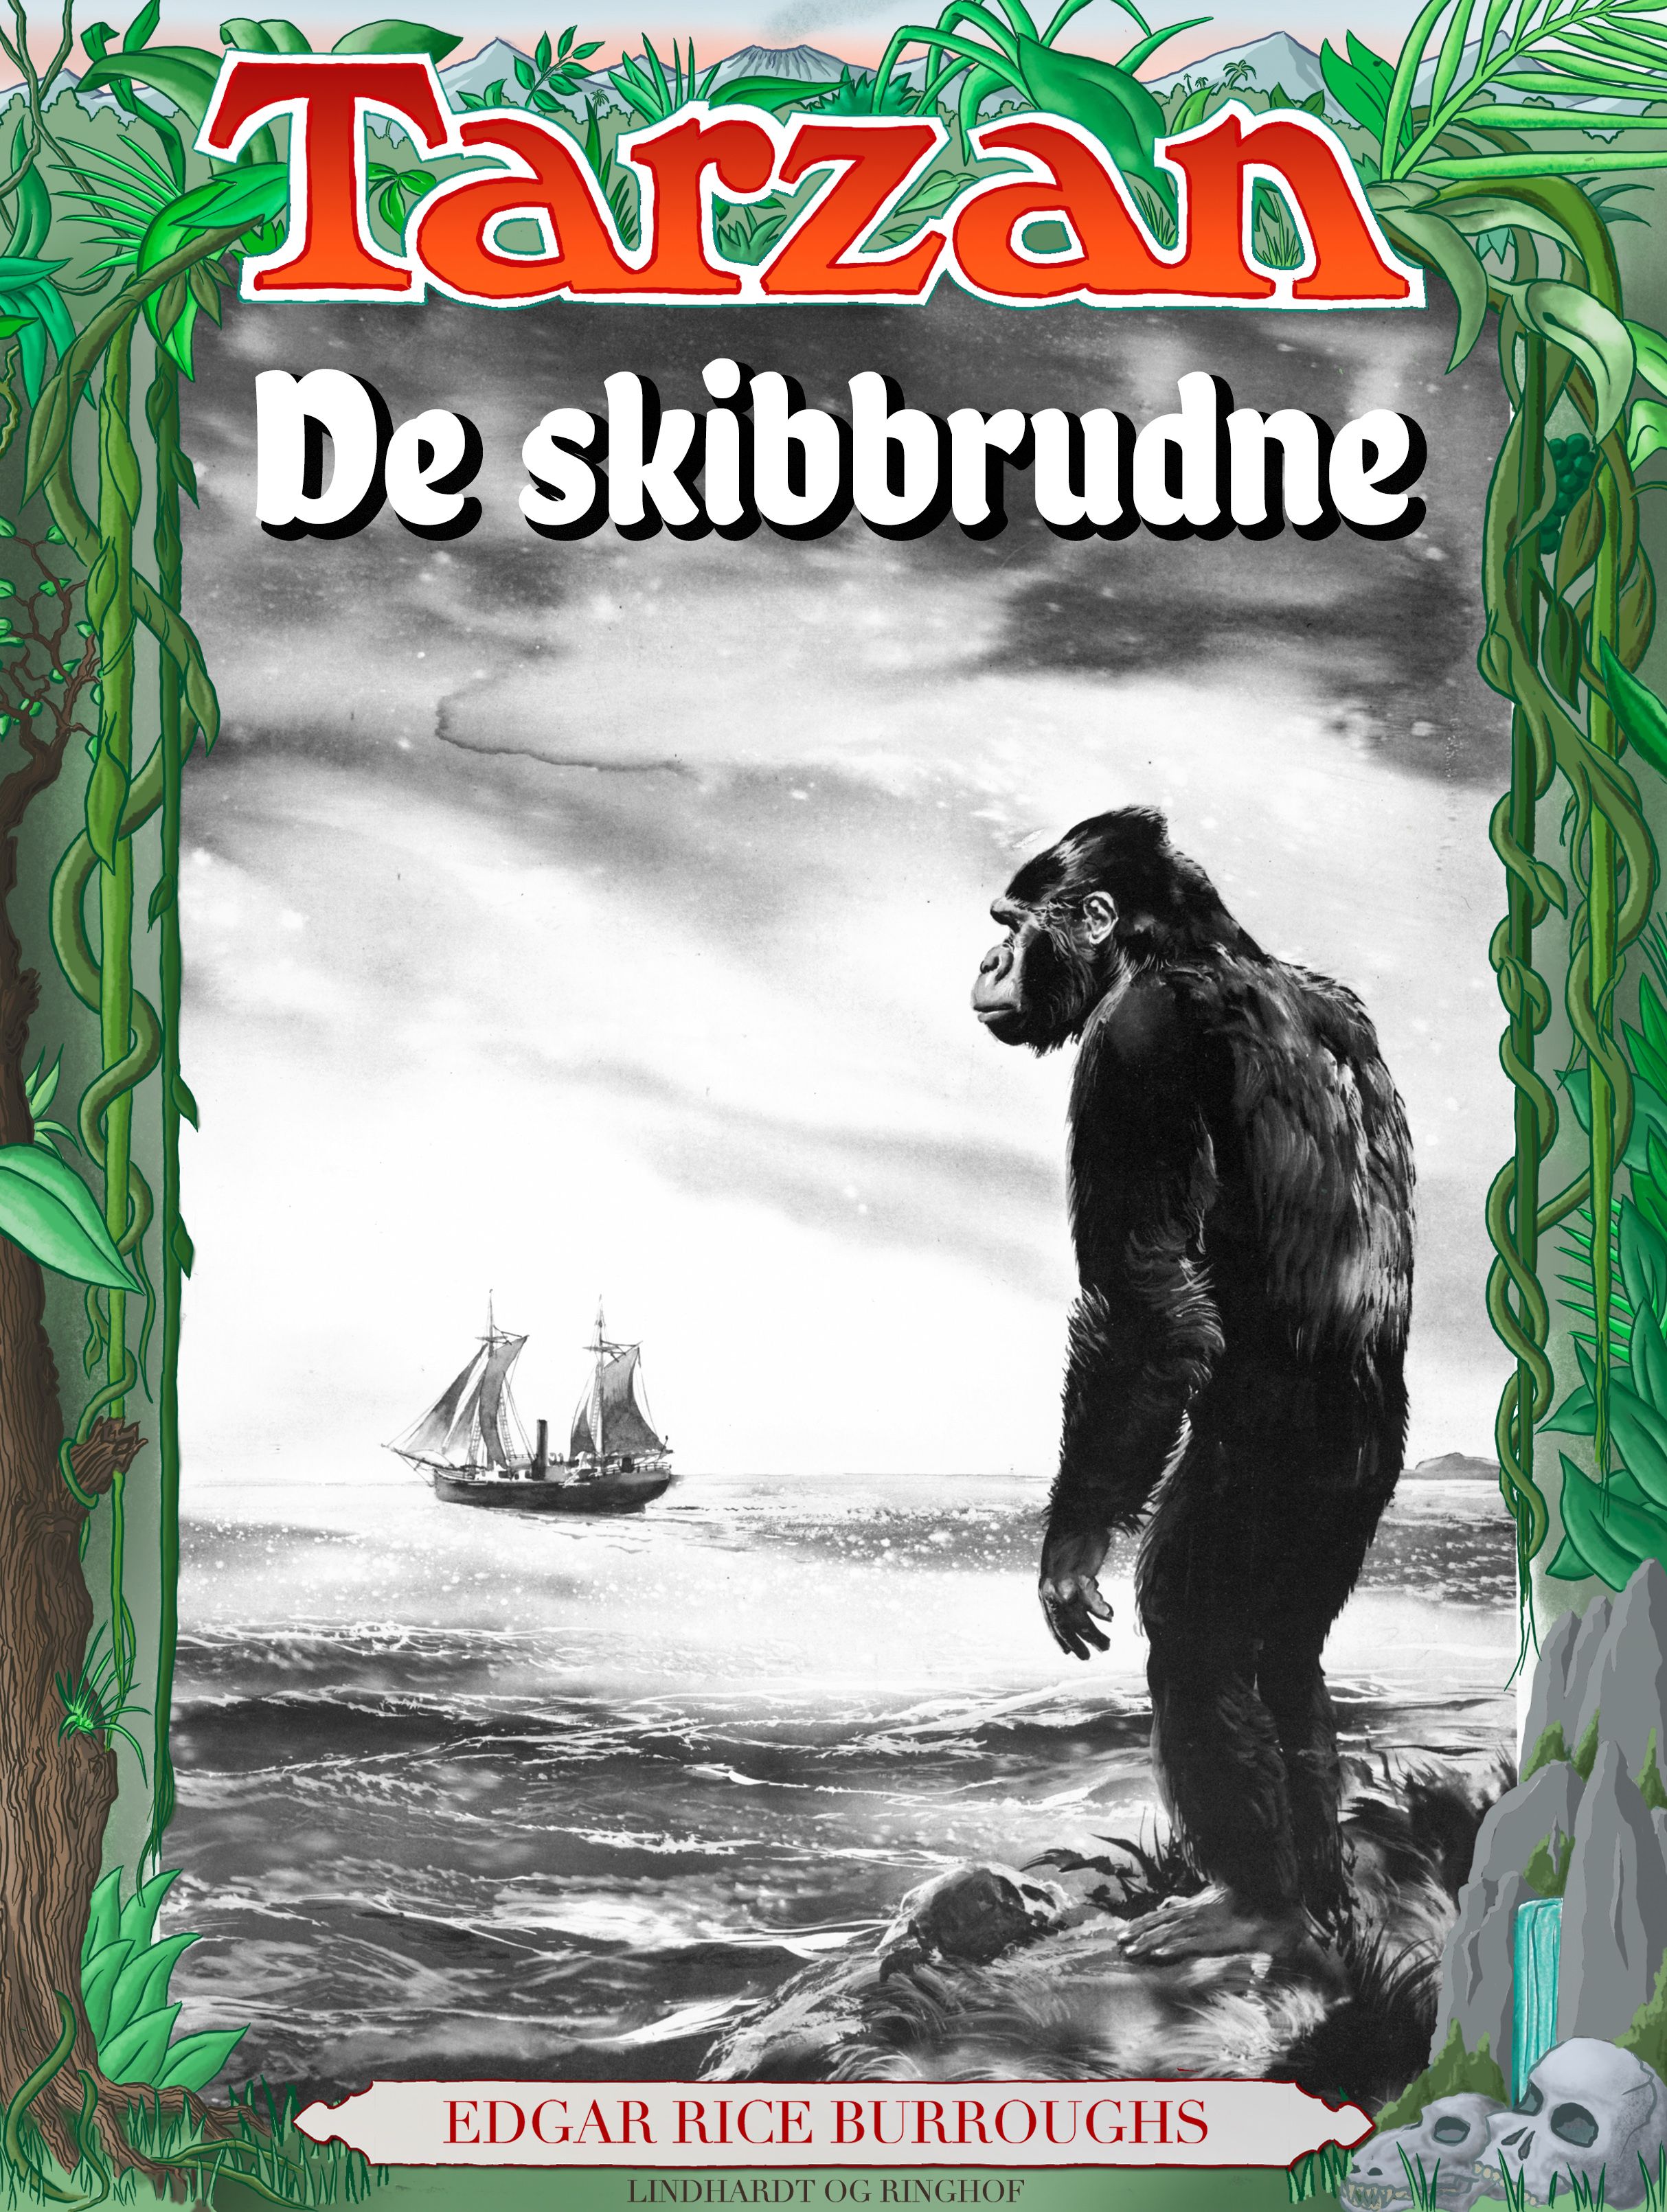 Tarzan - De skibbrudne, e-bok av Edgar Rice Burroughs